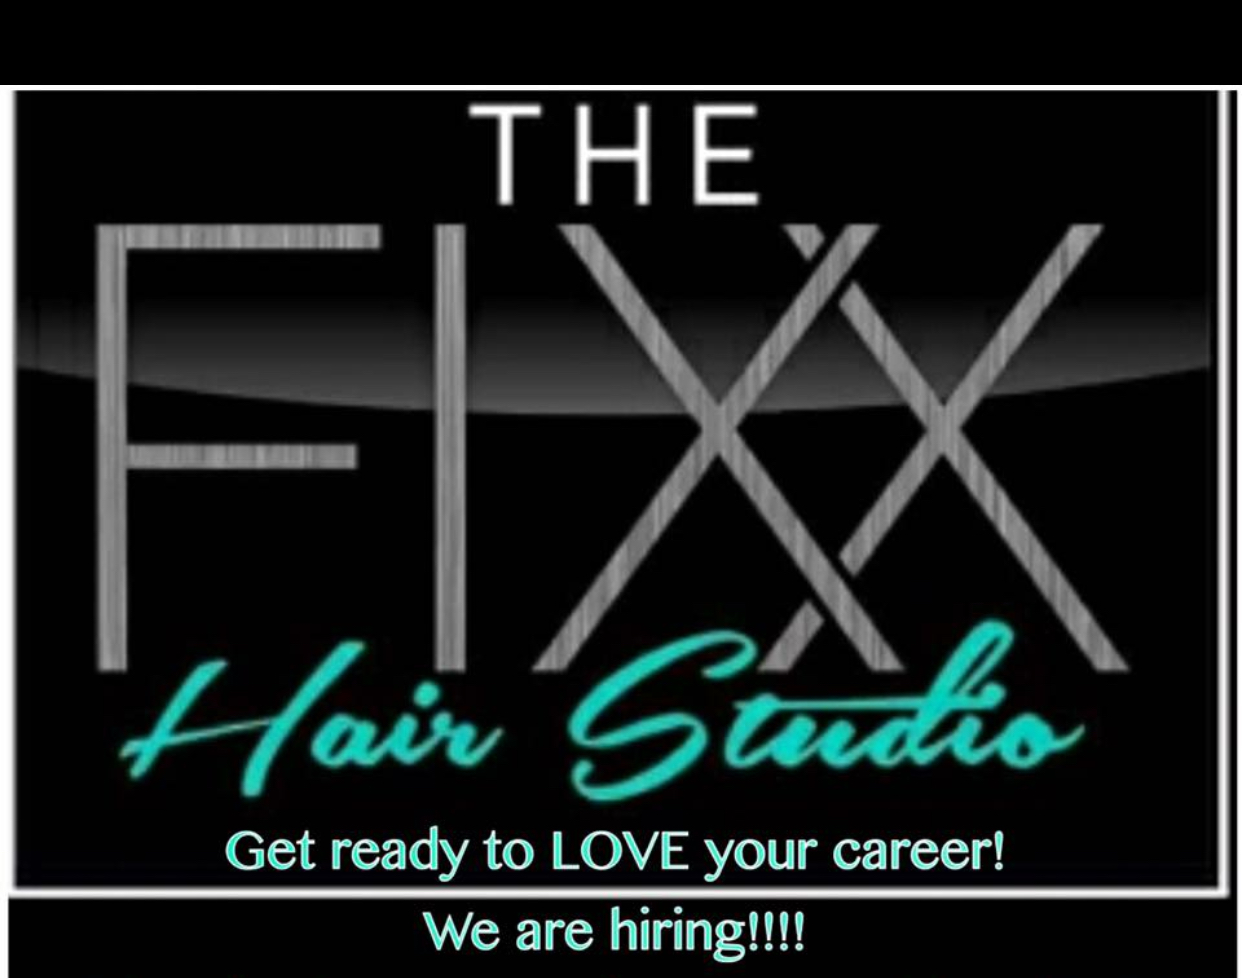 The Fixx Hair Studio